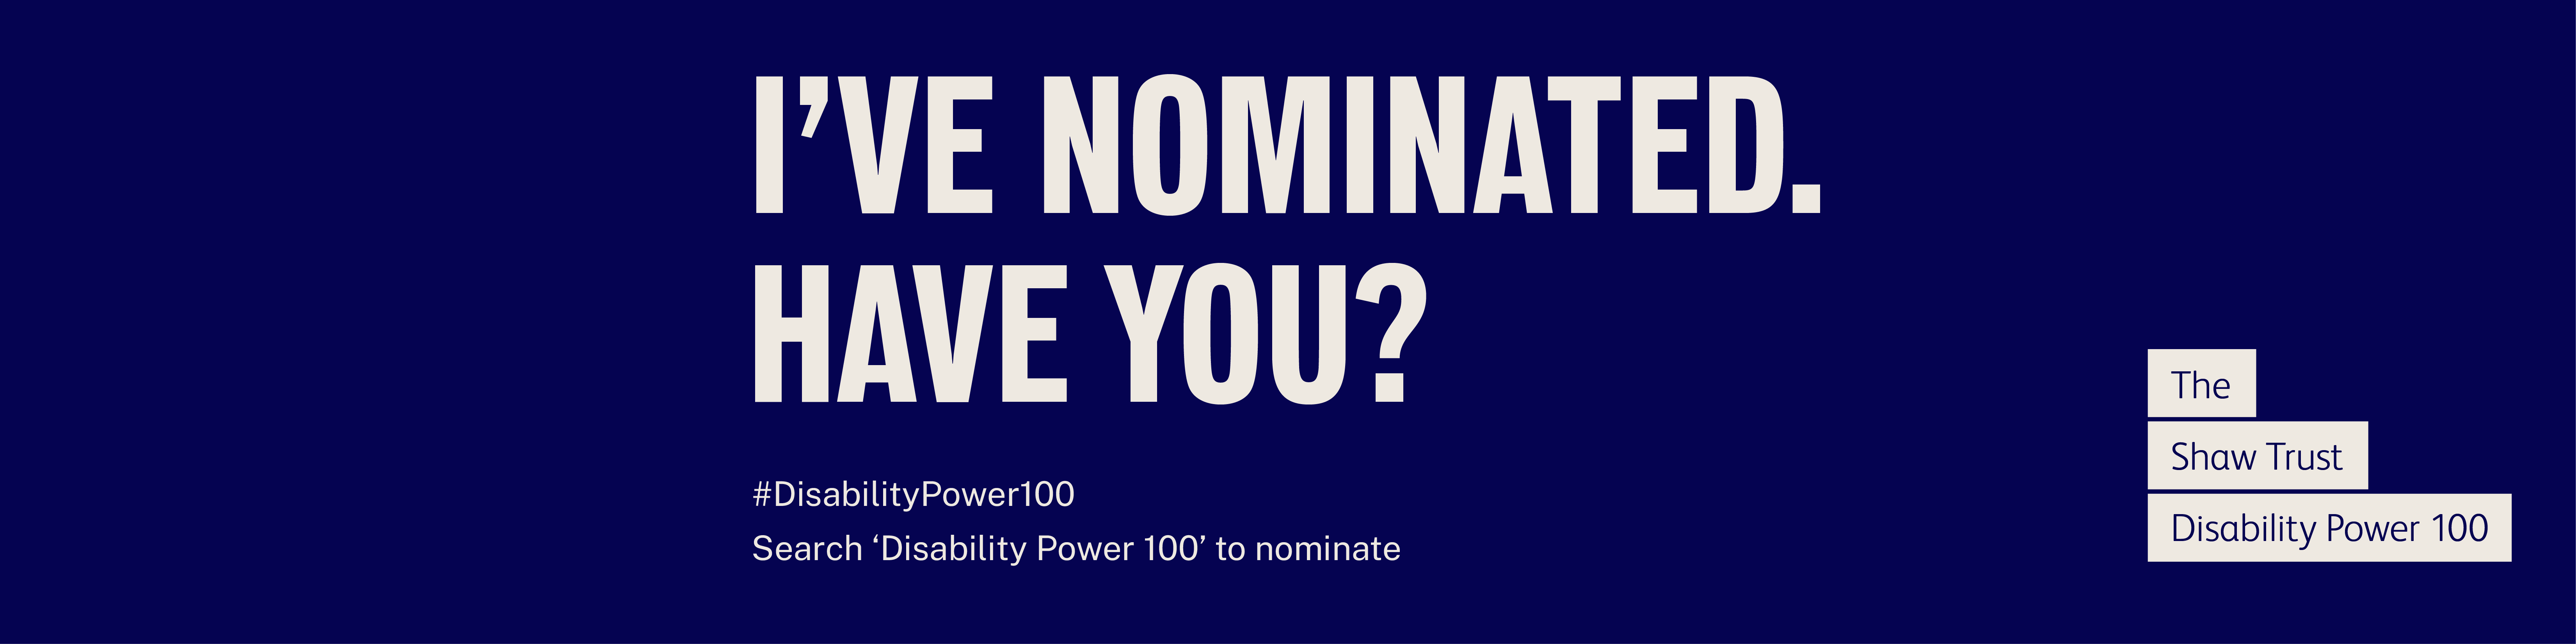 I've nominated. Have you?